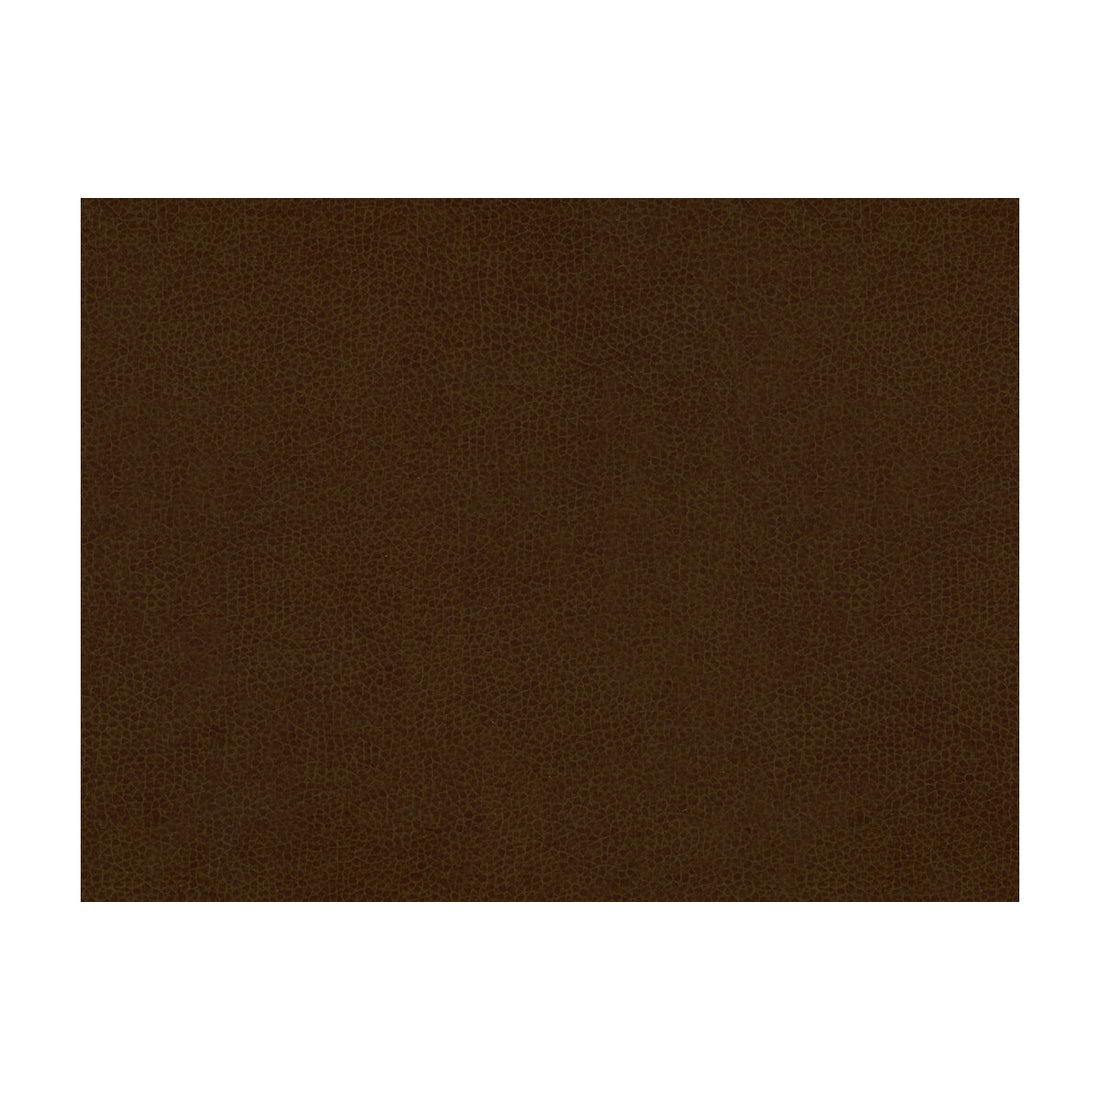 Abilene fabric in cocoa color - pattern ABILENE.6.0 - by Kravet Contract